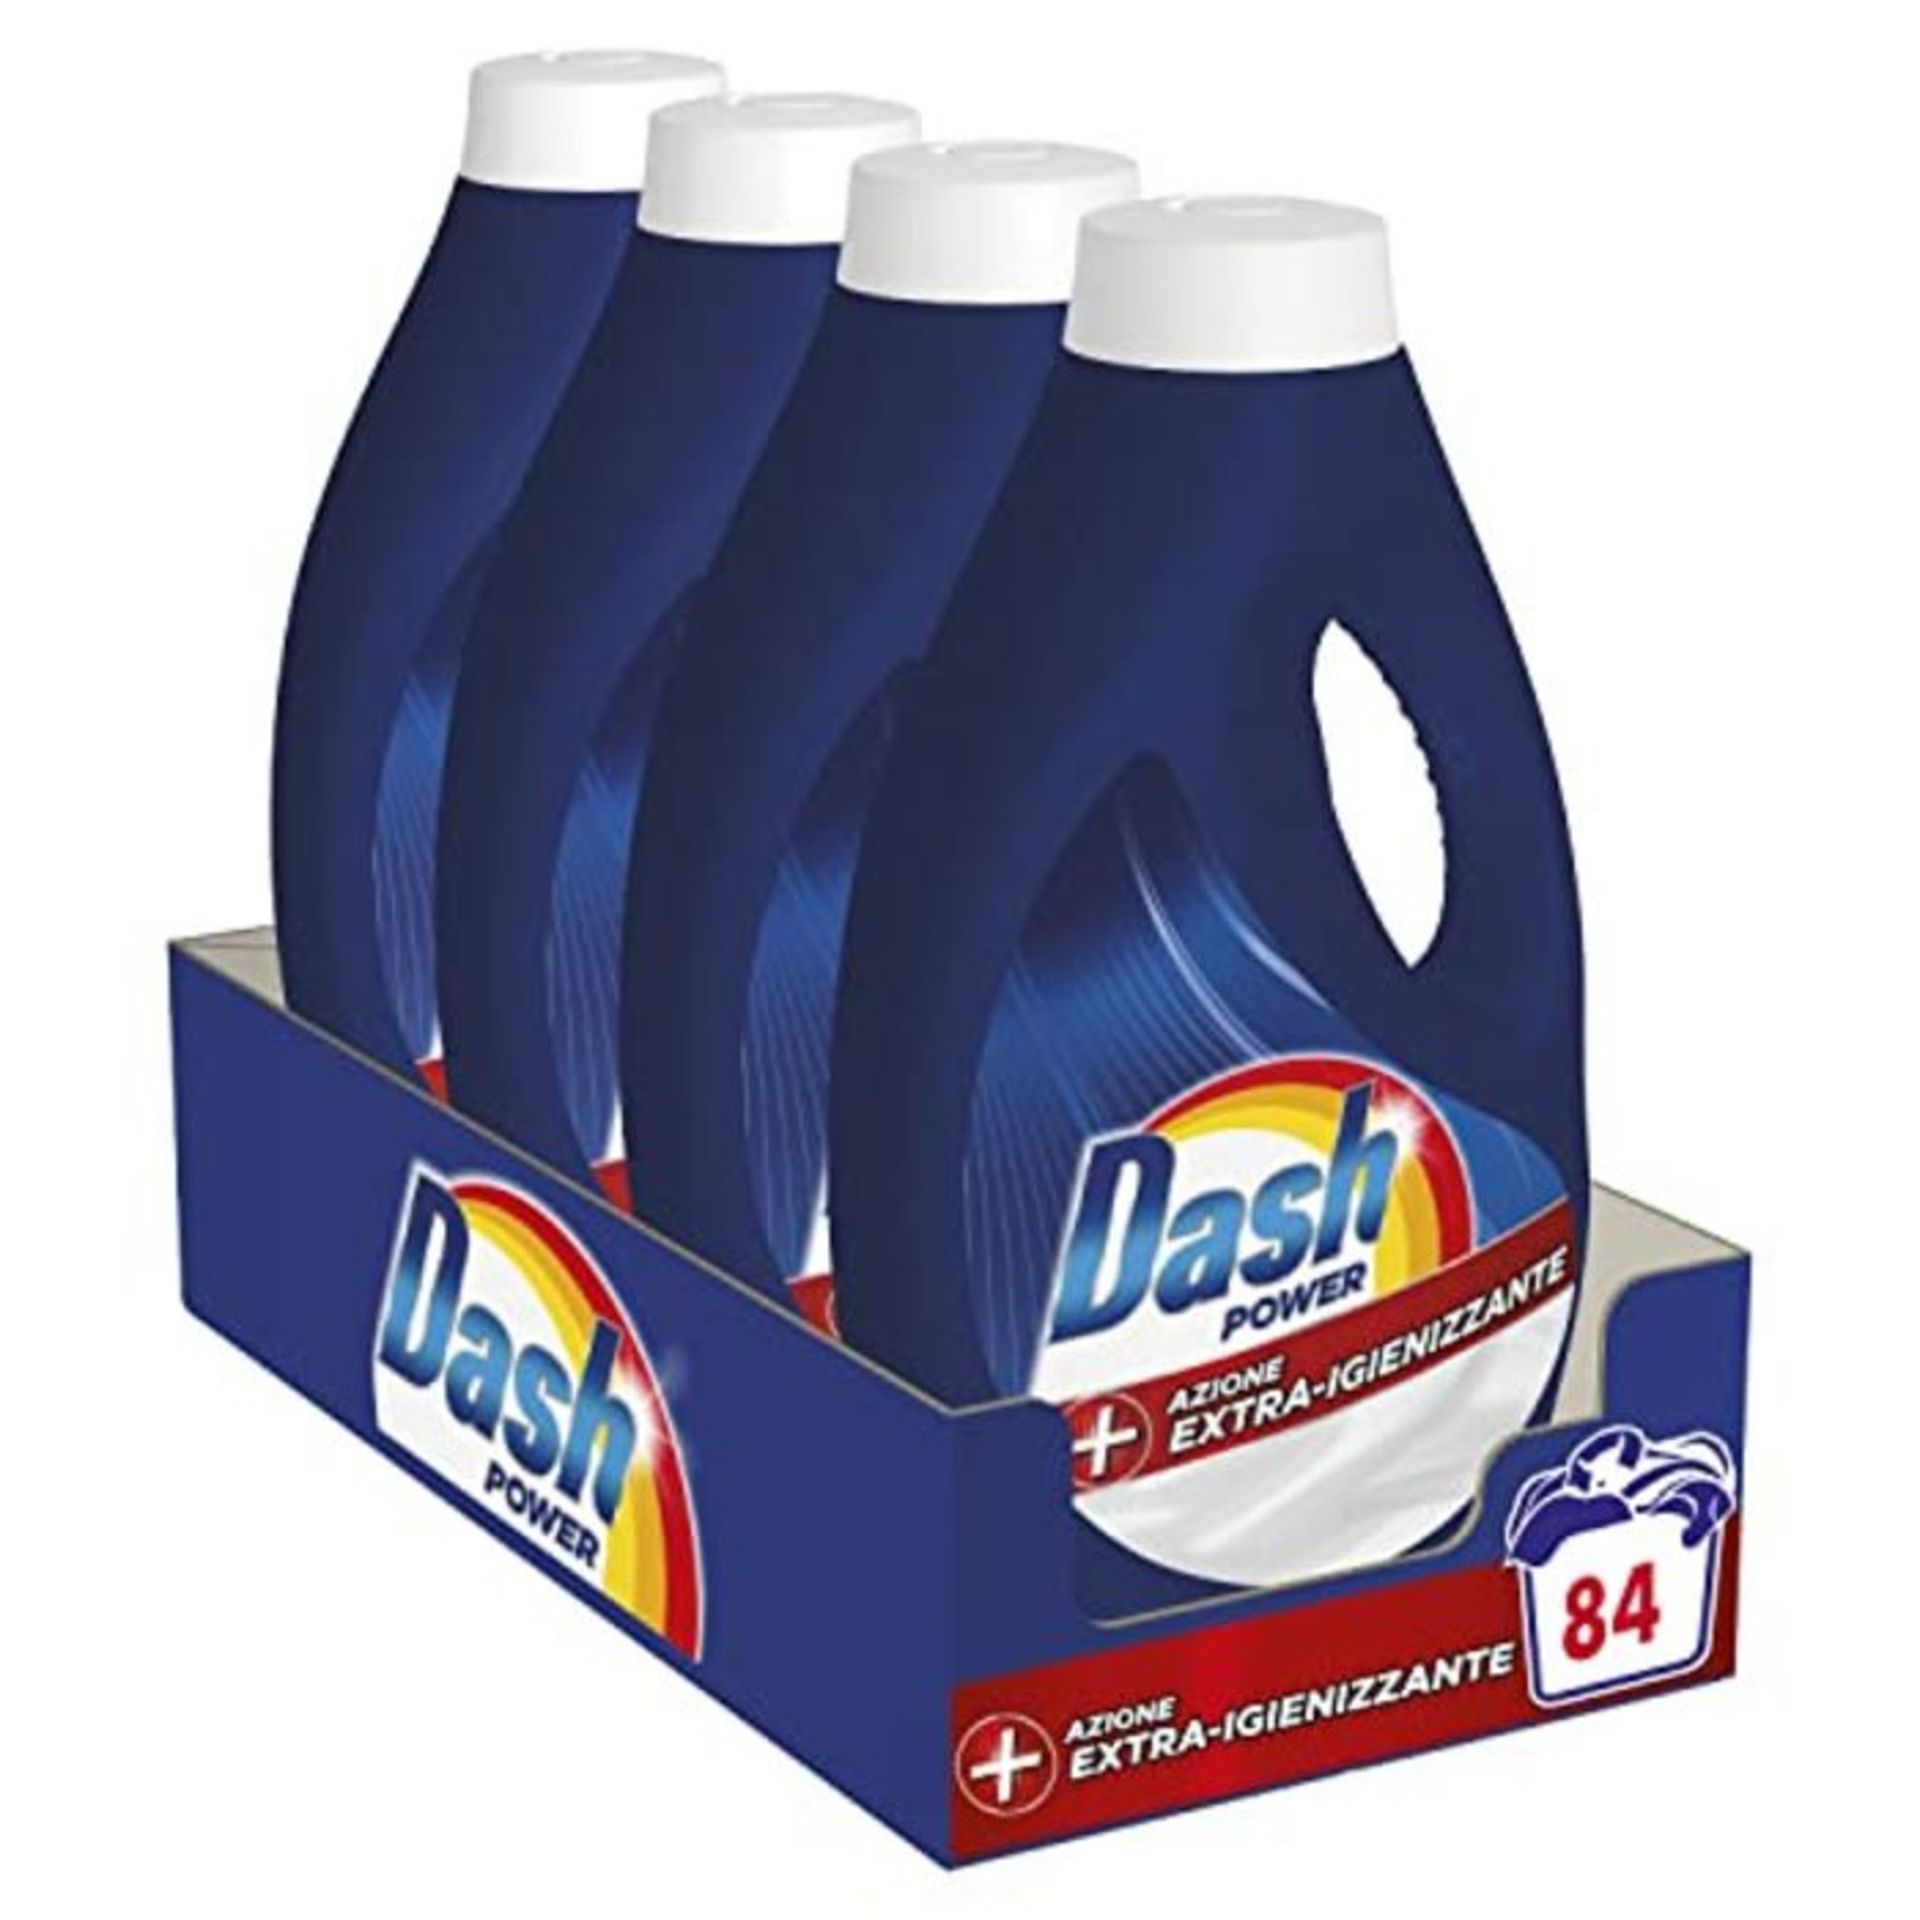 Dash Liquid Washing Detergent, 84 Washes (4 x 21), Extra-Sanitizing Action, Deep Clean